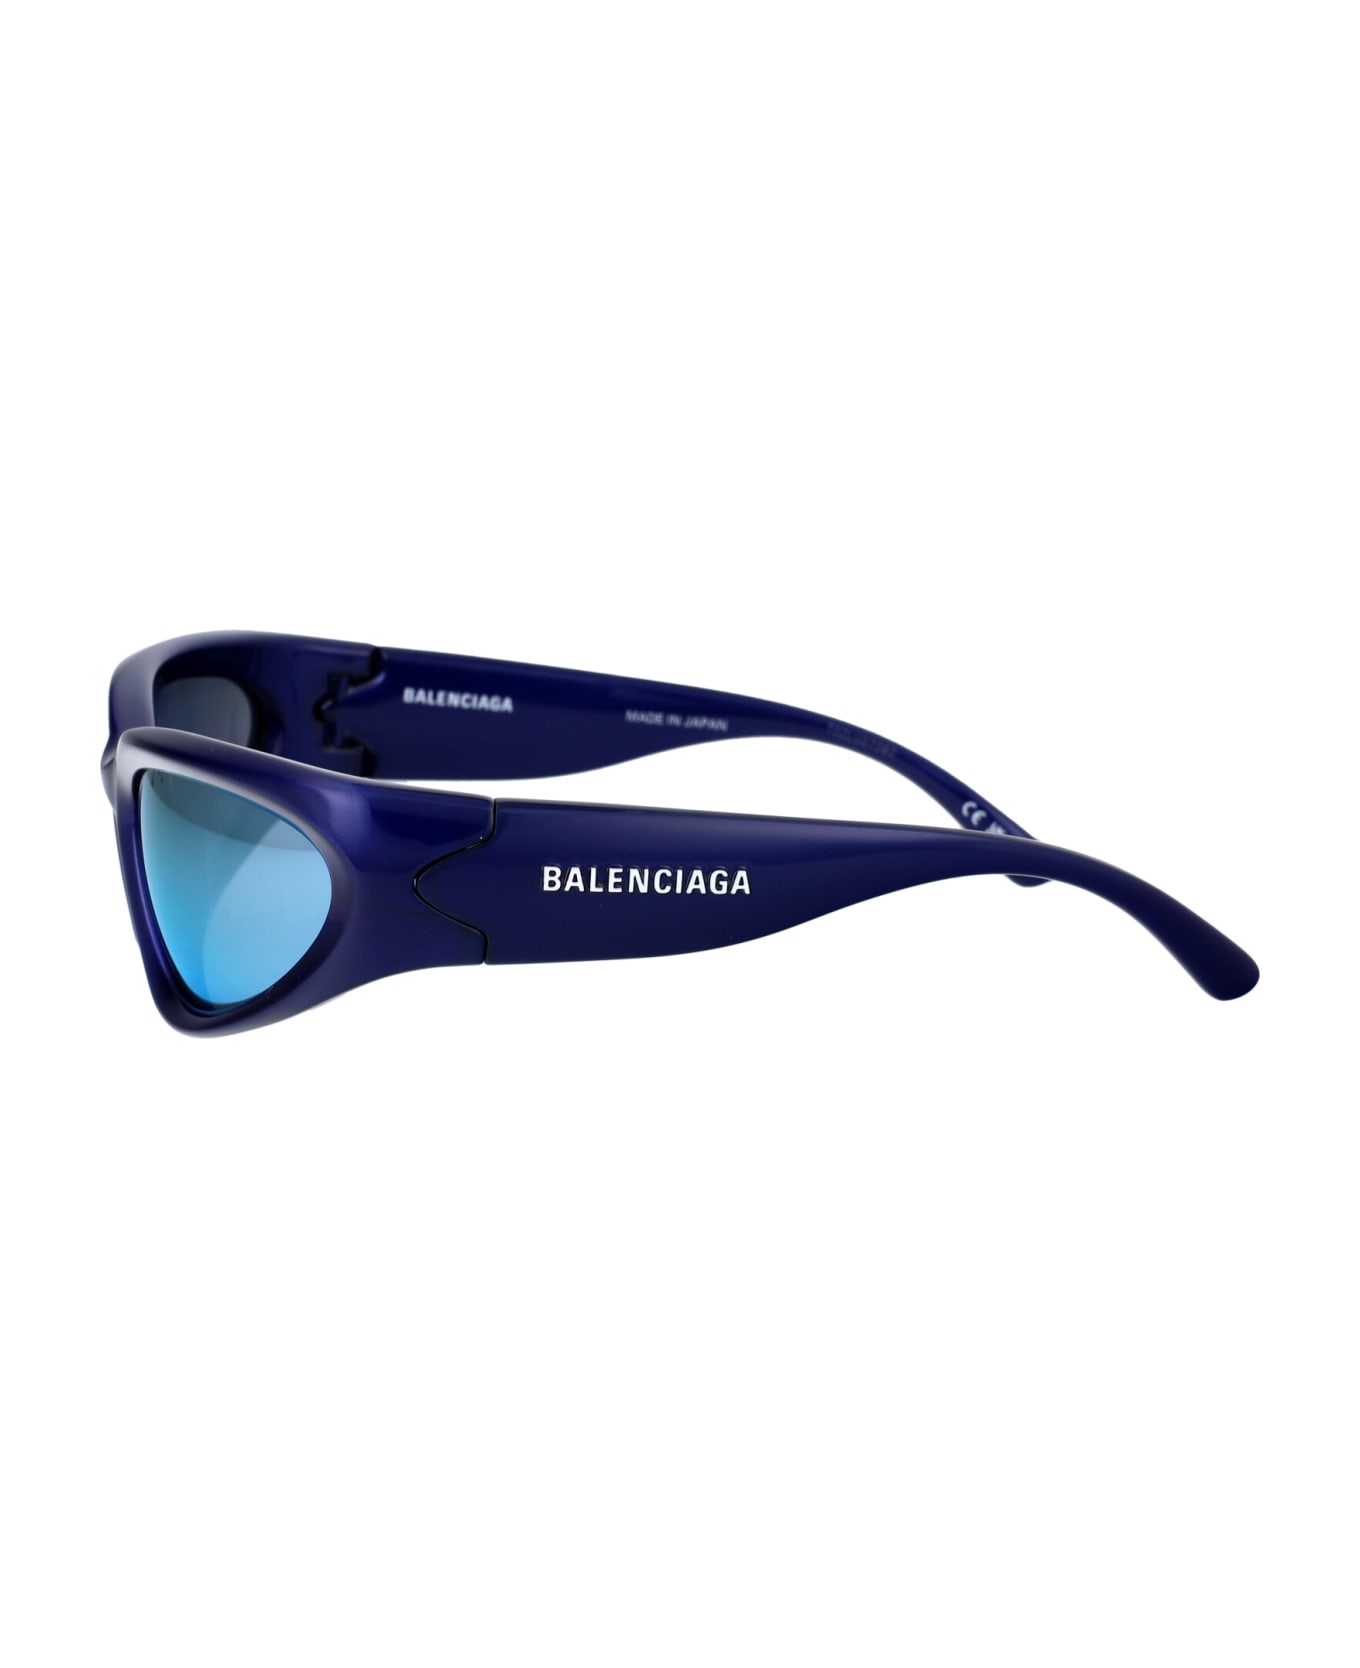 Balenciaga Eyewear Bb0157s Sunglasses - 009 BLUE BLUE BLUE